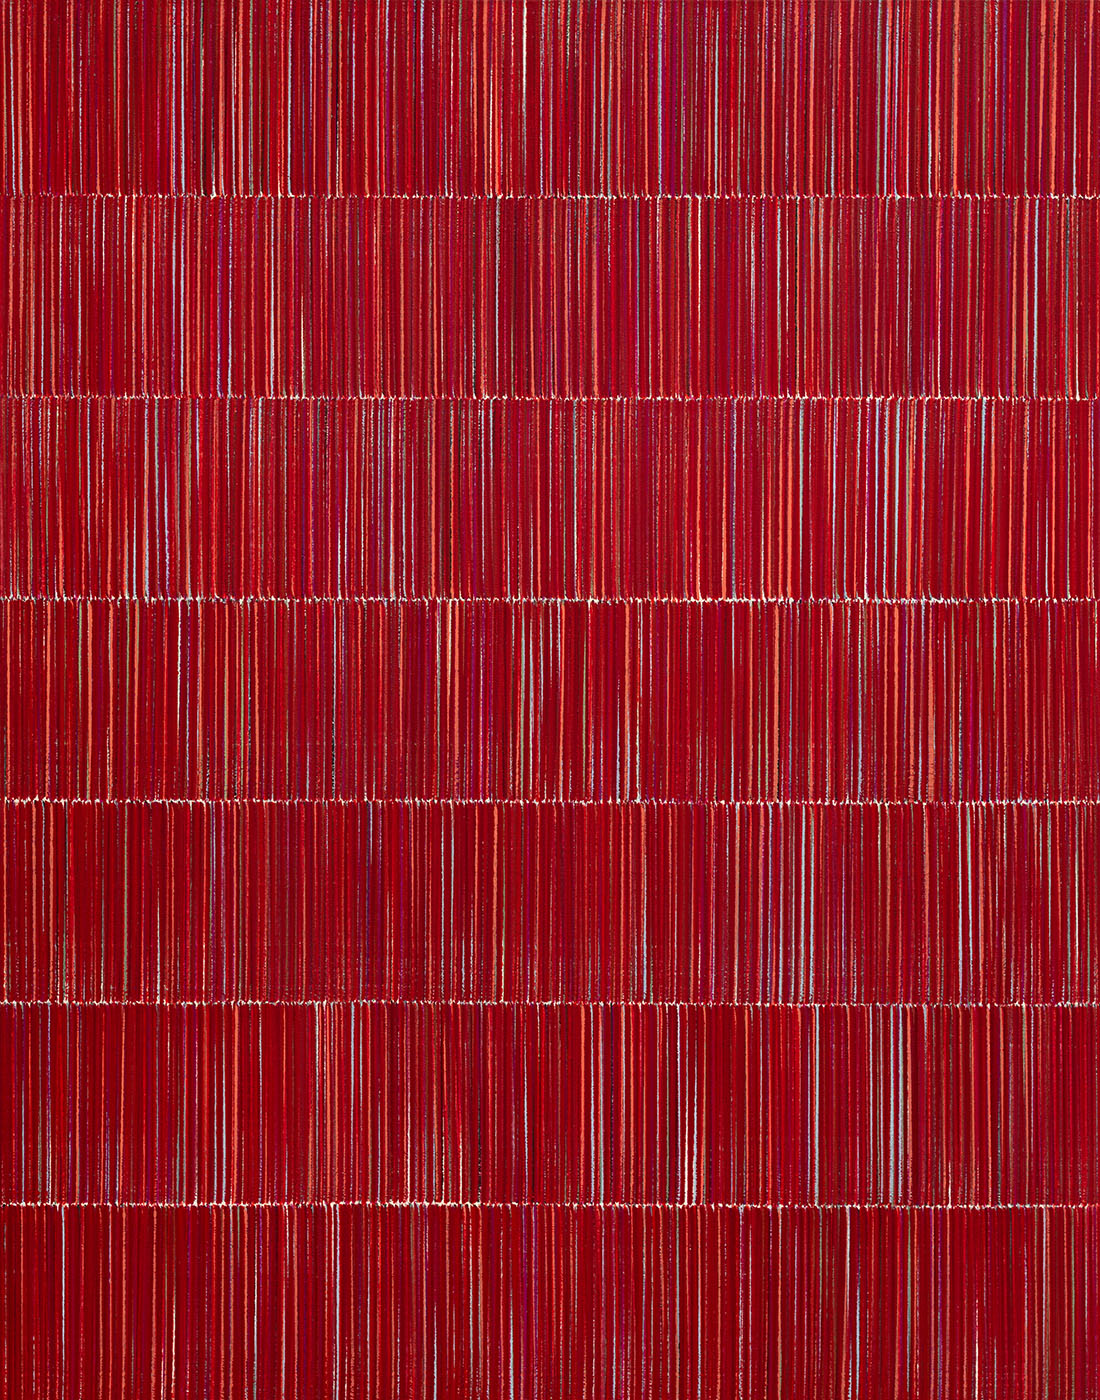 Nikola Dimitrov, FarbKlang IV, 2019, Pigmente, Bindemittel auf Leinwand, 140 × 110 cm